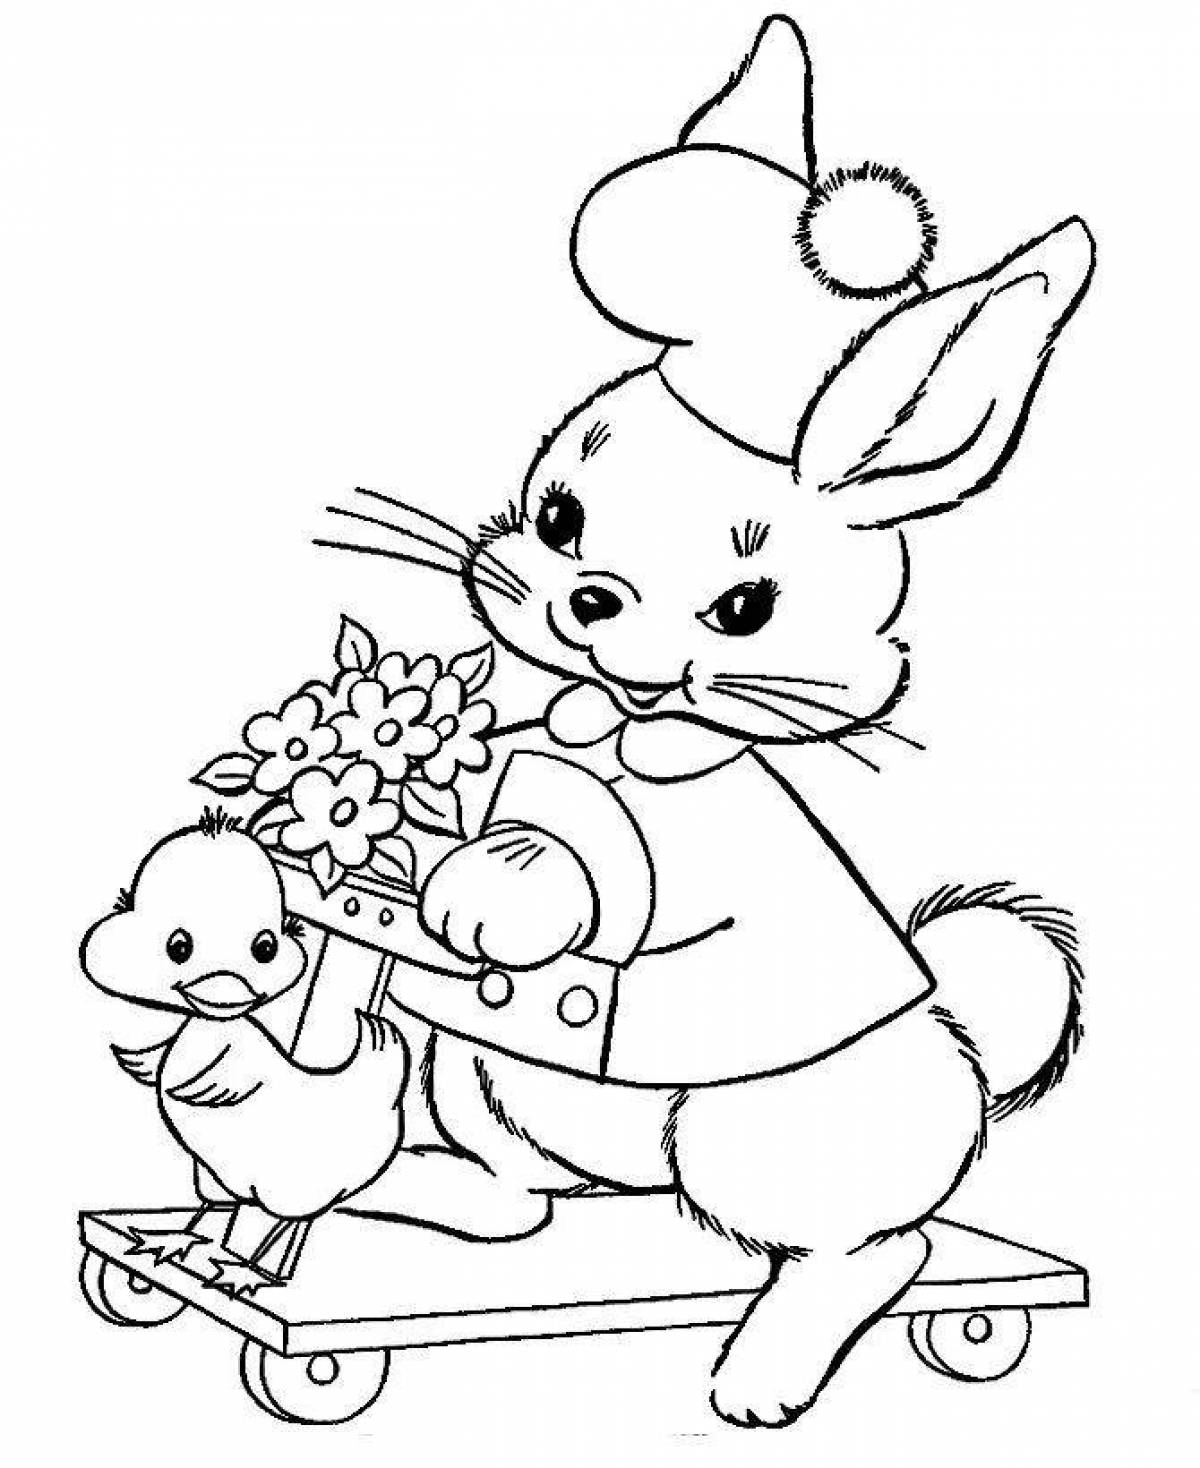 Joyful coloring cat and rabbit